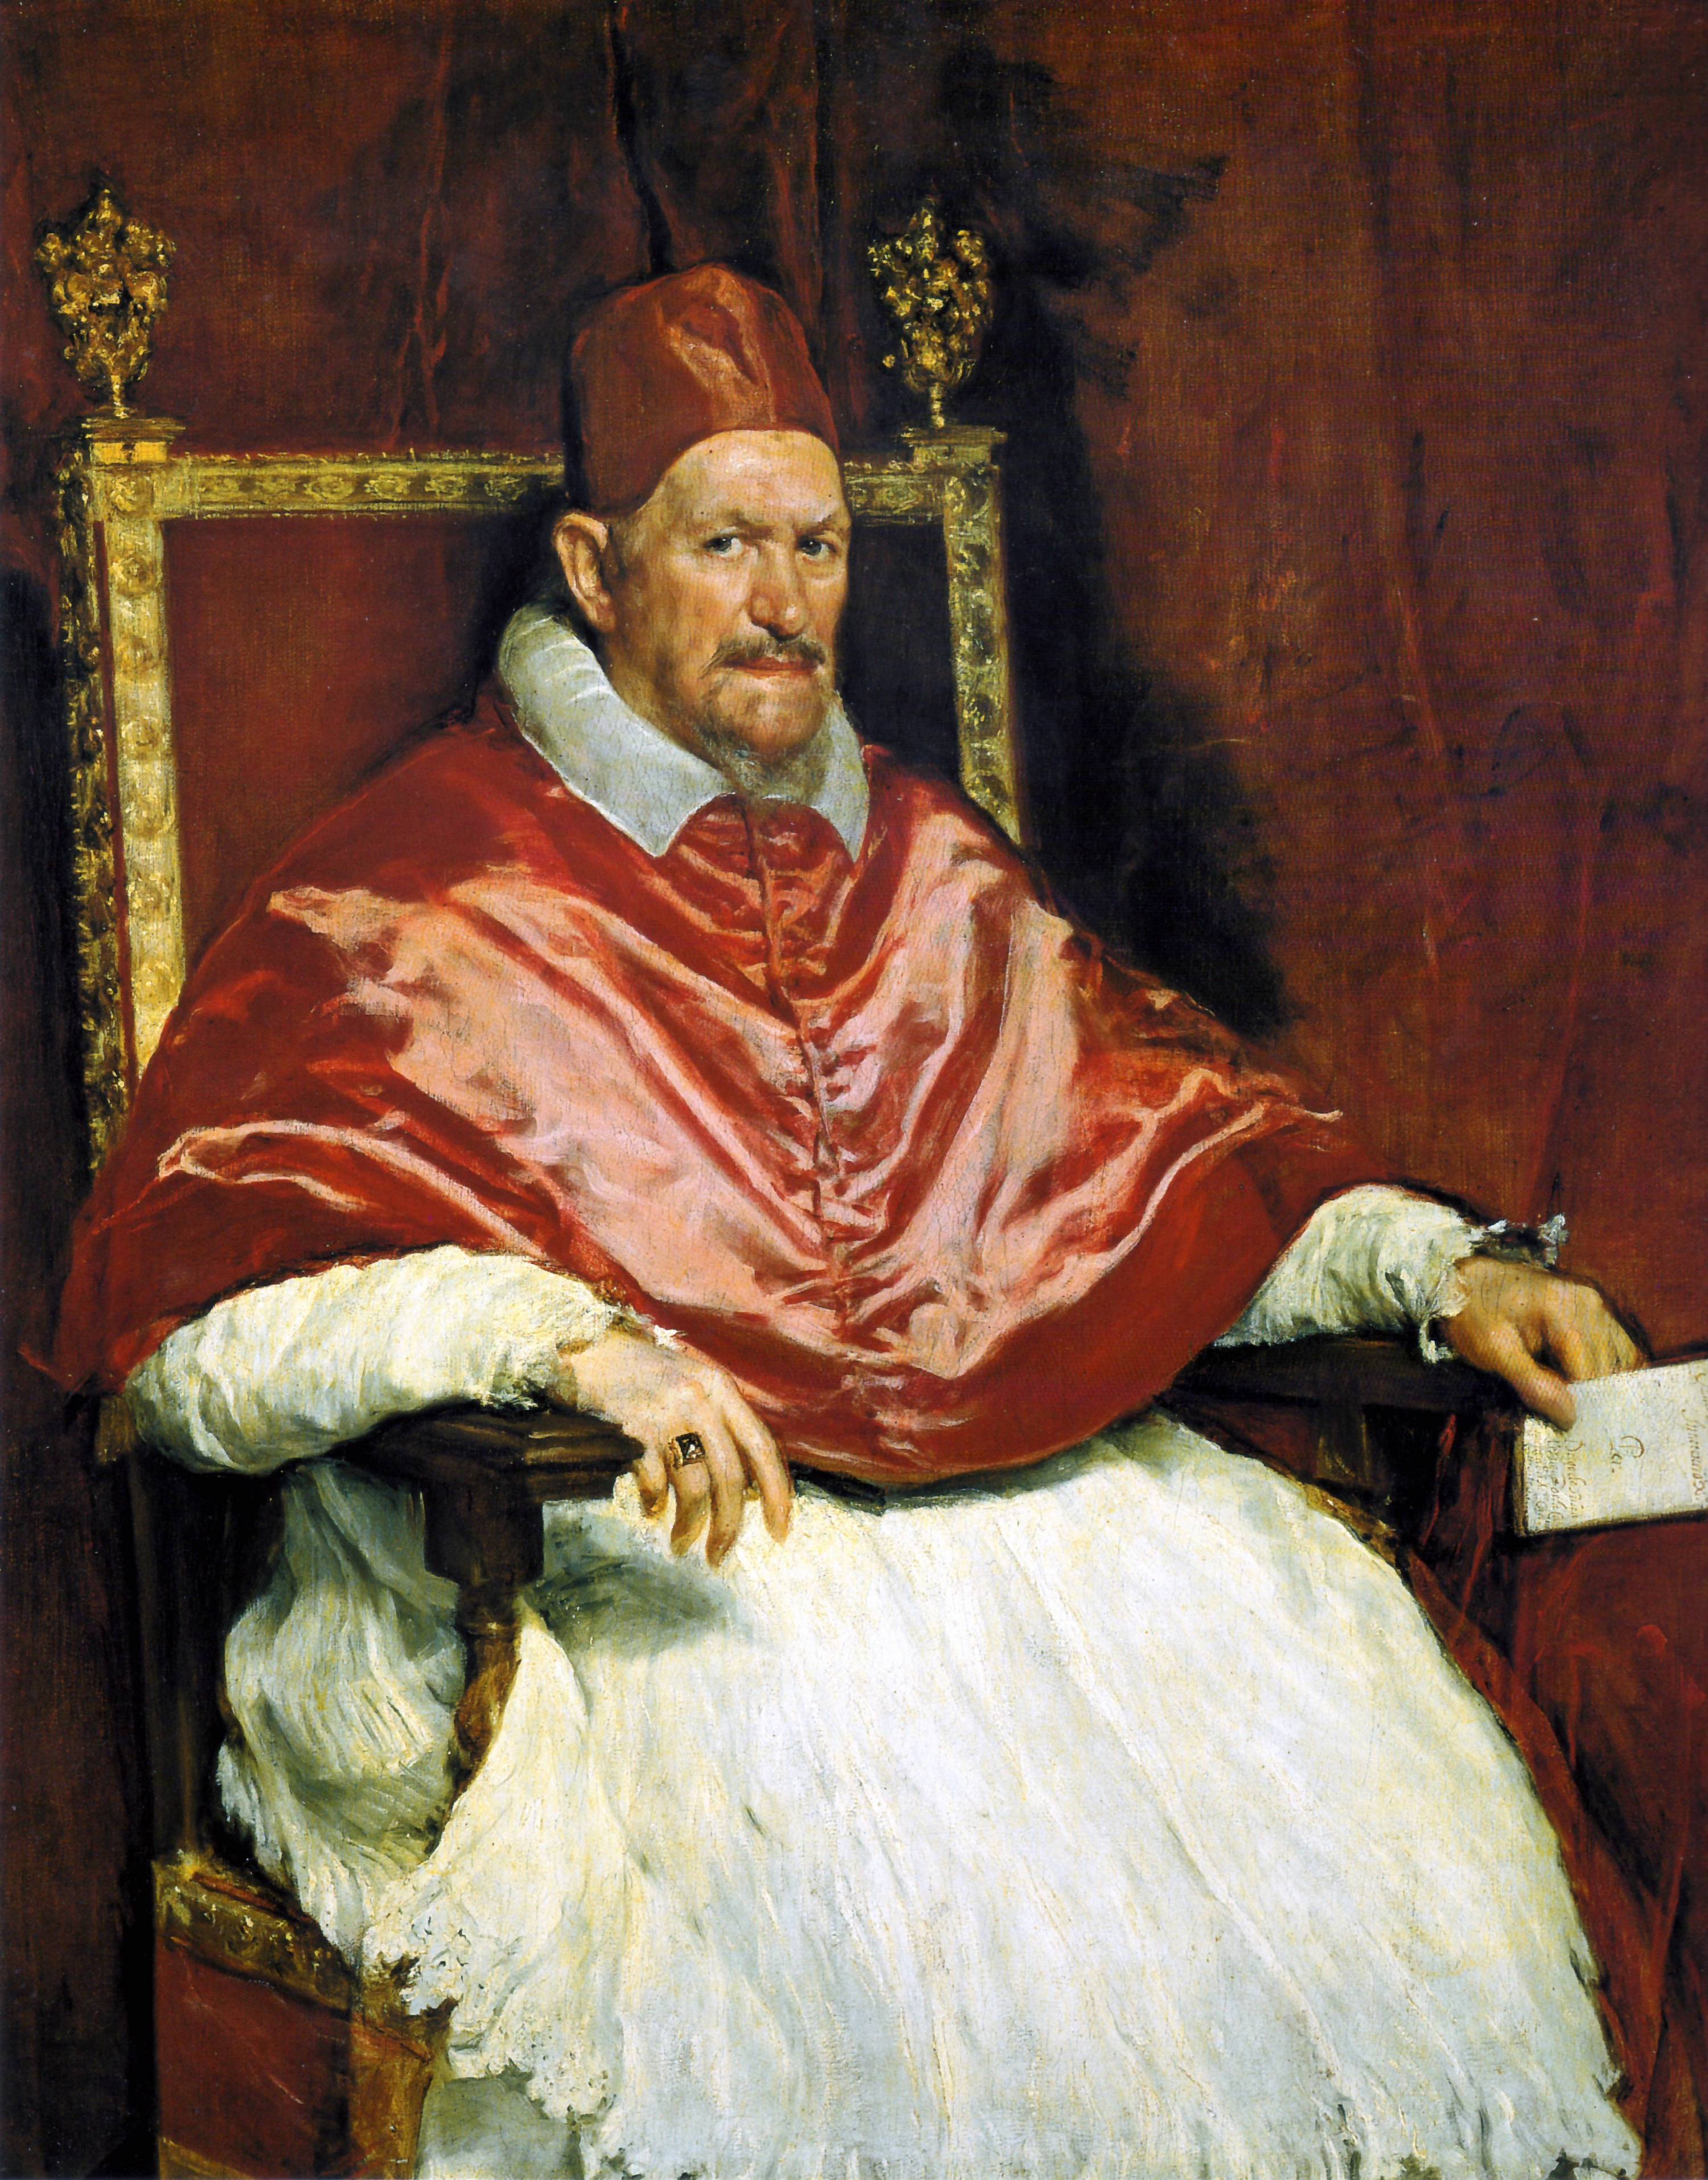 Portrait of Pope Innocent X by Diego Velázquez - ca. 1650 - 141 × 119 cm Galleria Doria Pamphilj